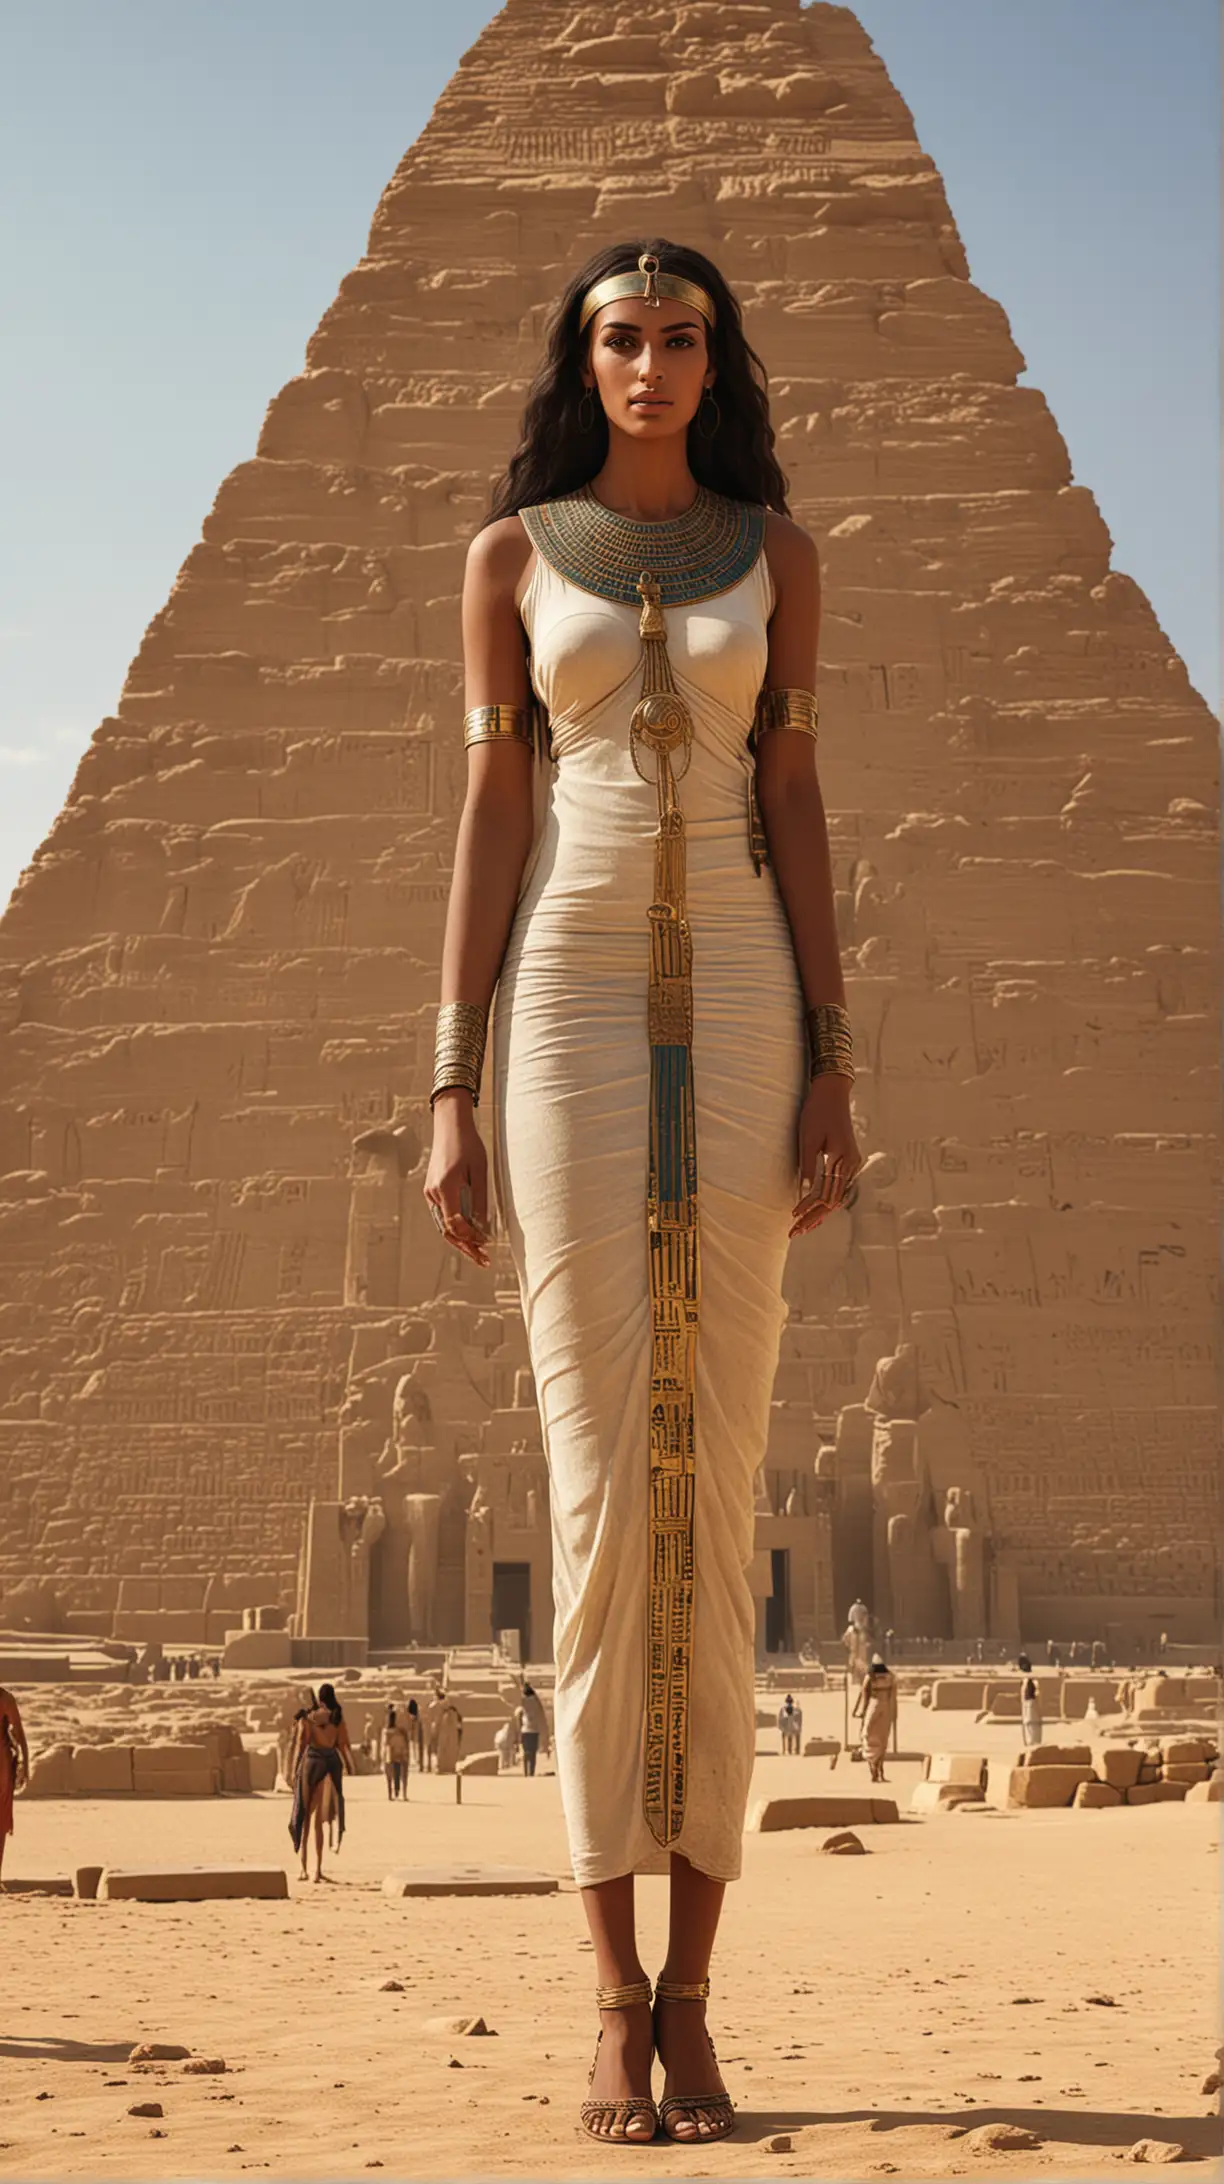 Godlike Ancient Egyptian Woman with Extraordinary Height near Pyramid